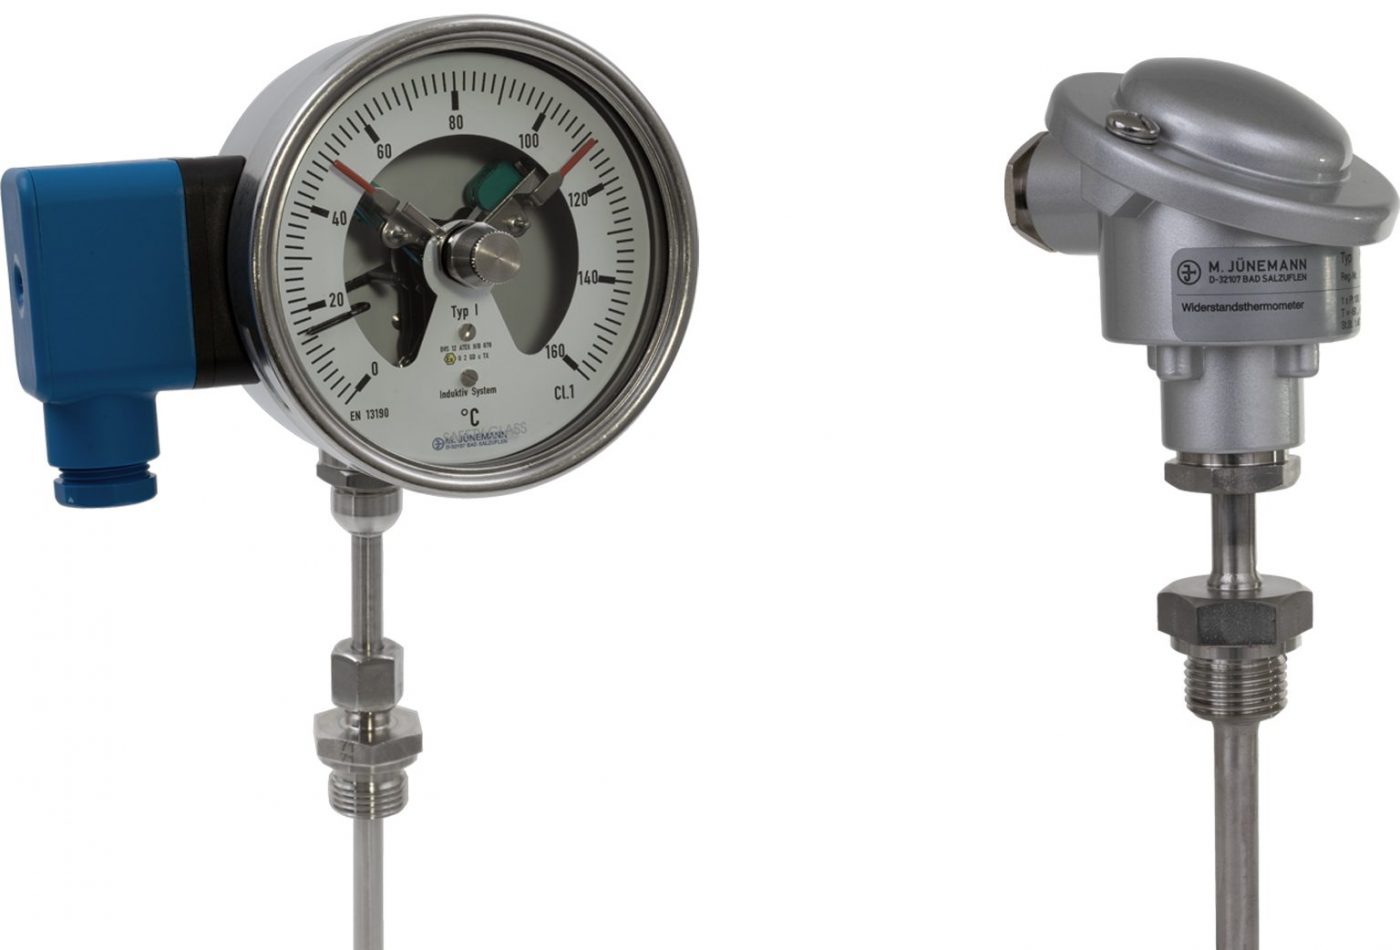 Jünemann Instruments - Digitalthermometer, starrer Fühler (Batterie)